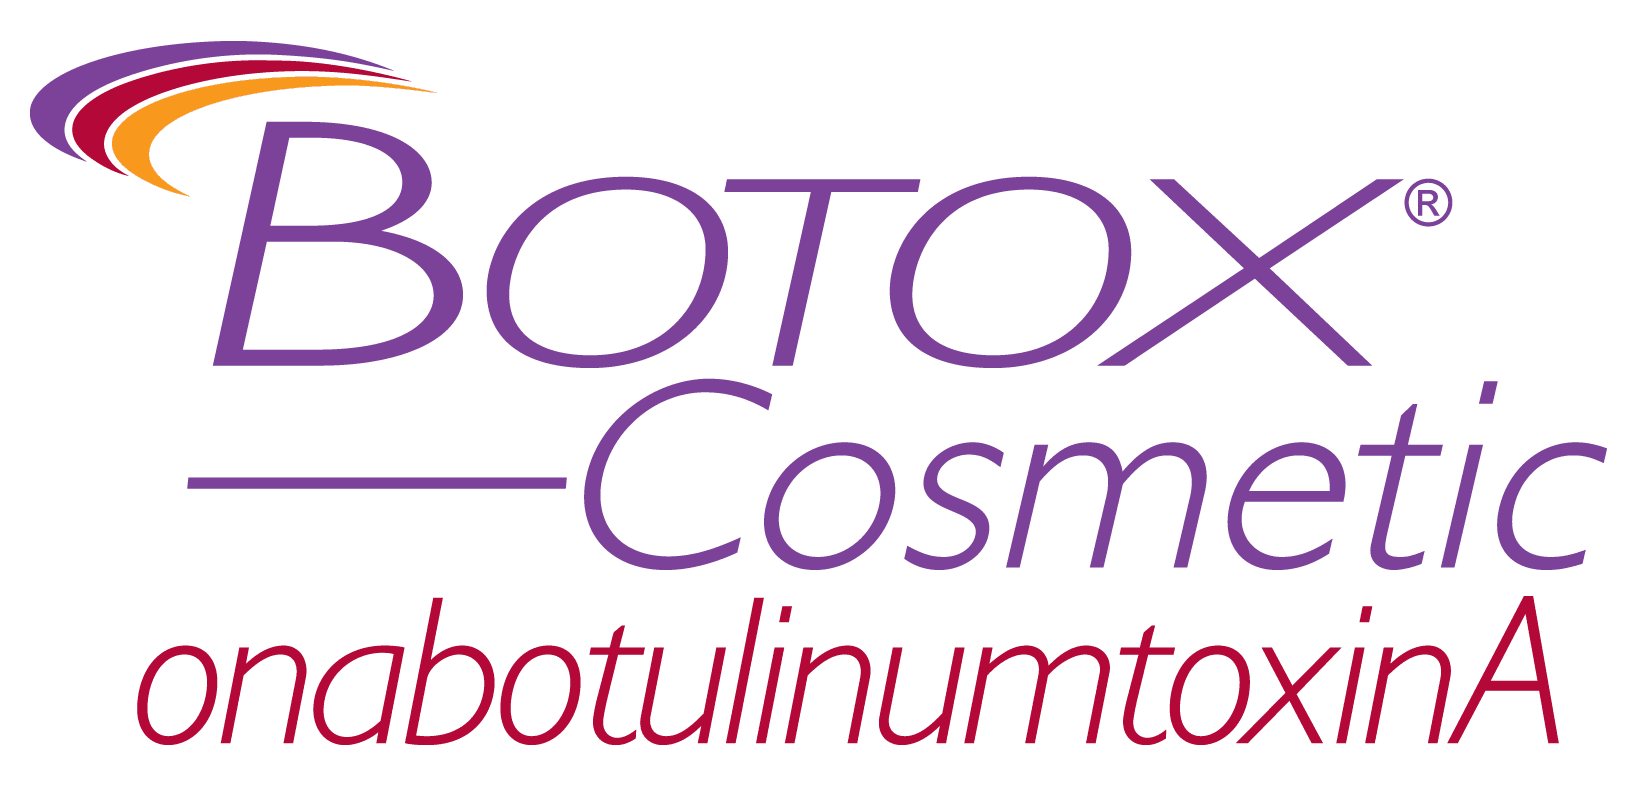 Botox_cosmetic_logo